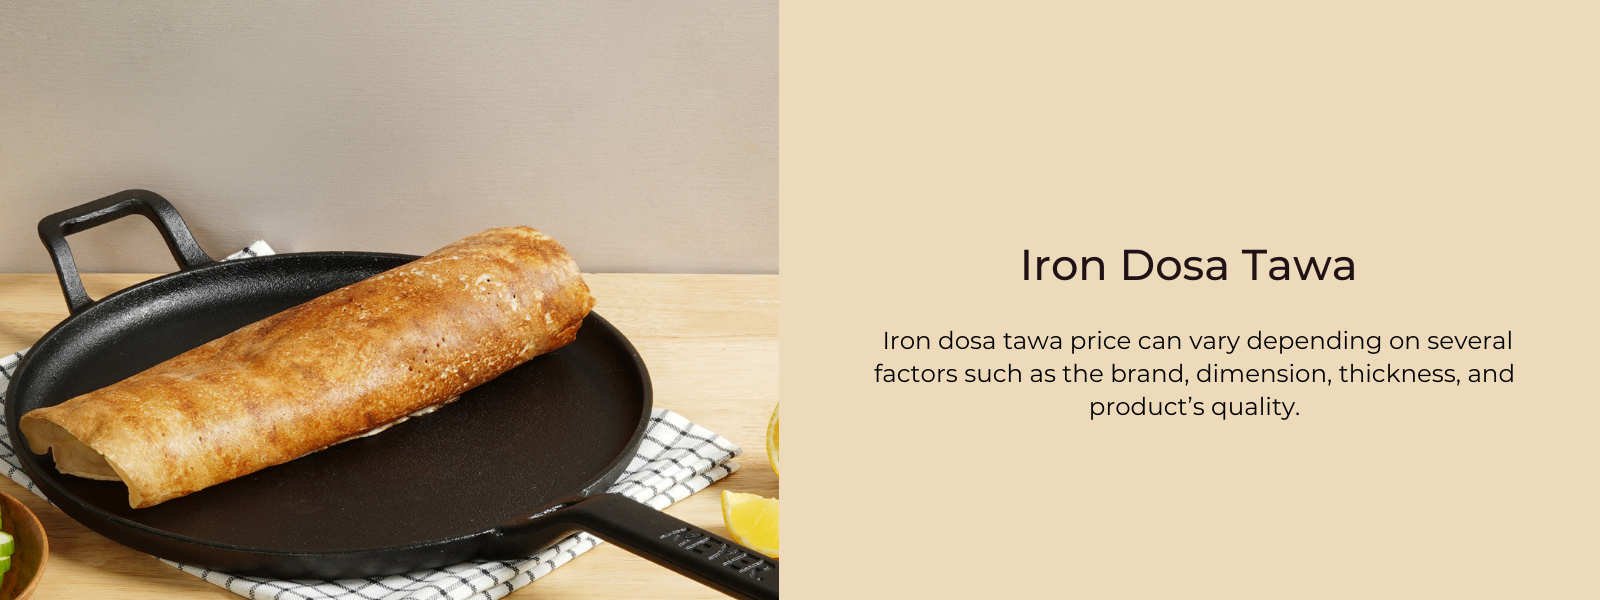 How to make your regular iron tawa non-stick